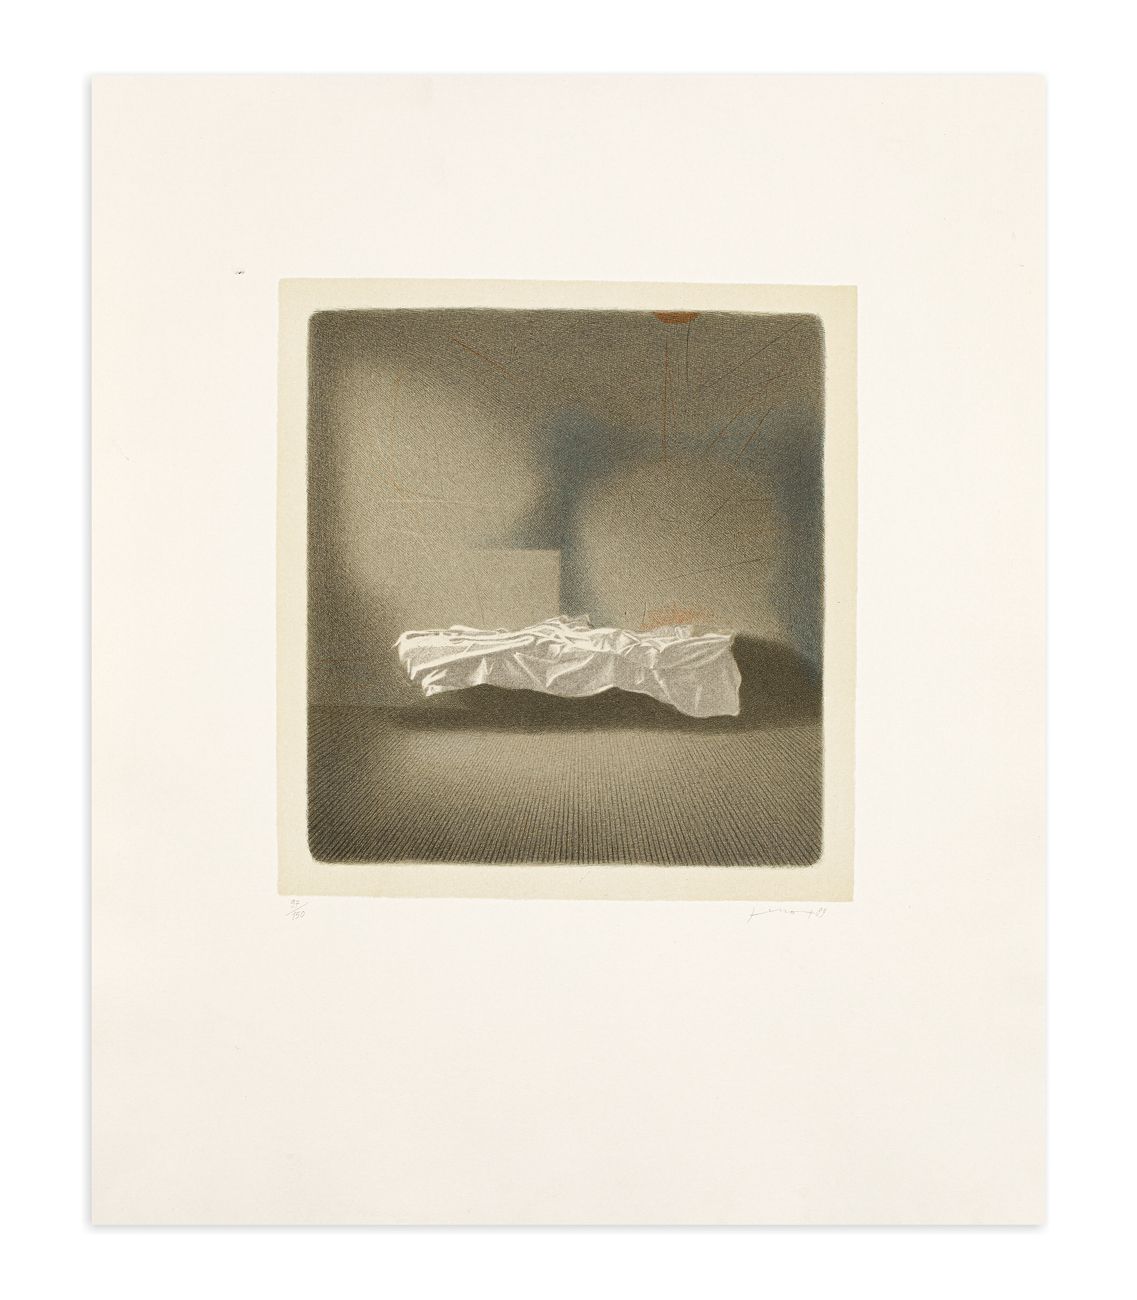 GIANFRANCO FERRONI (1927-2001) - Lettino, 1989 背景石版画

60x50厘米

正面有铅笔签名、日期和编号（Exe&hellip;